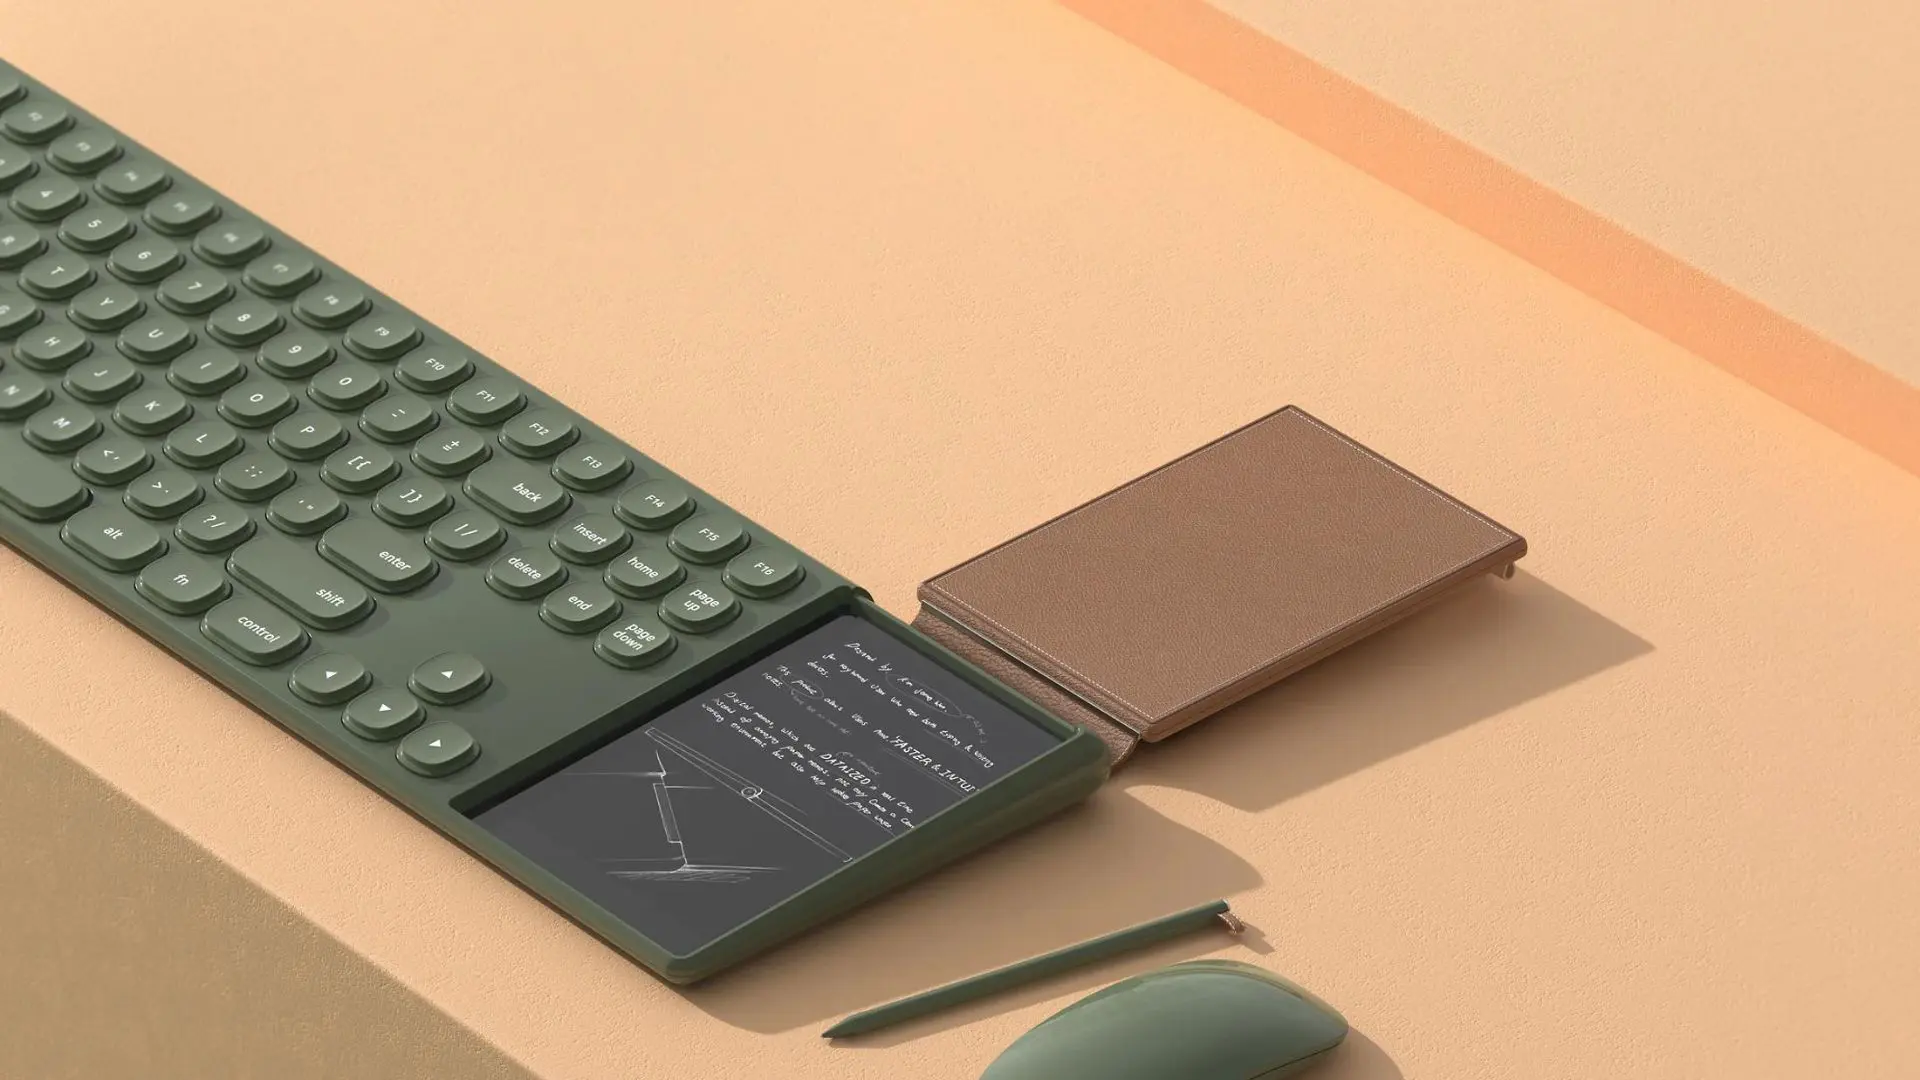 Overture keyboard by Designer Dot _ go paperless